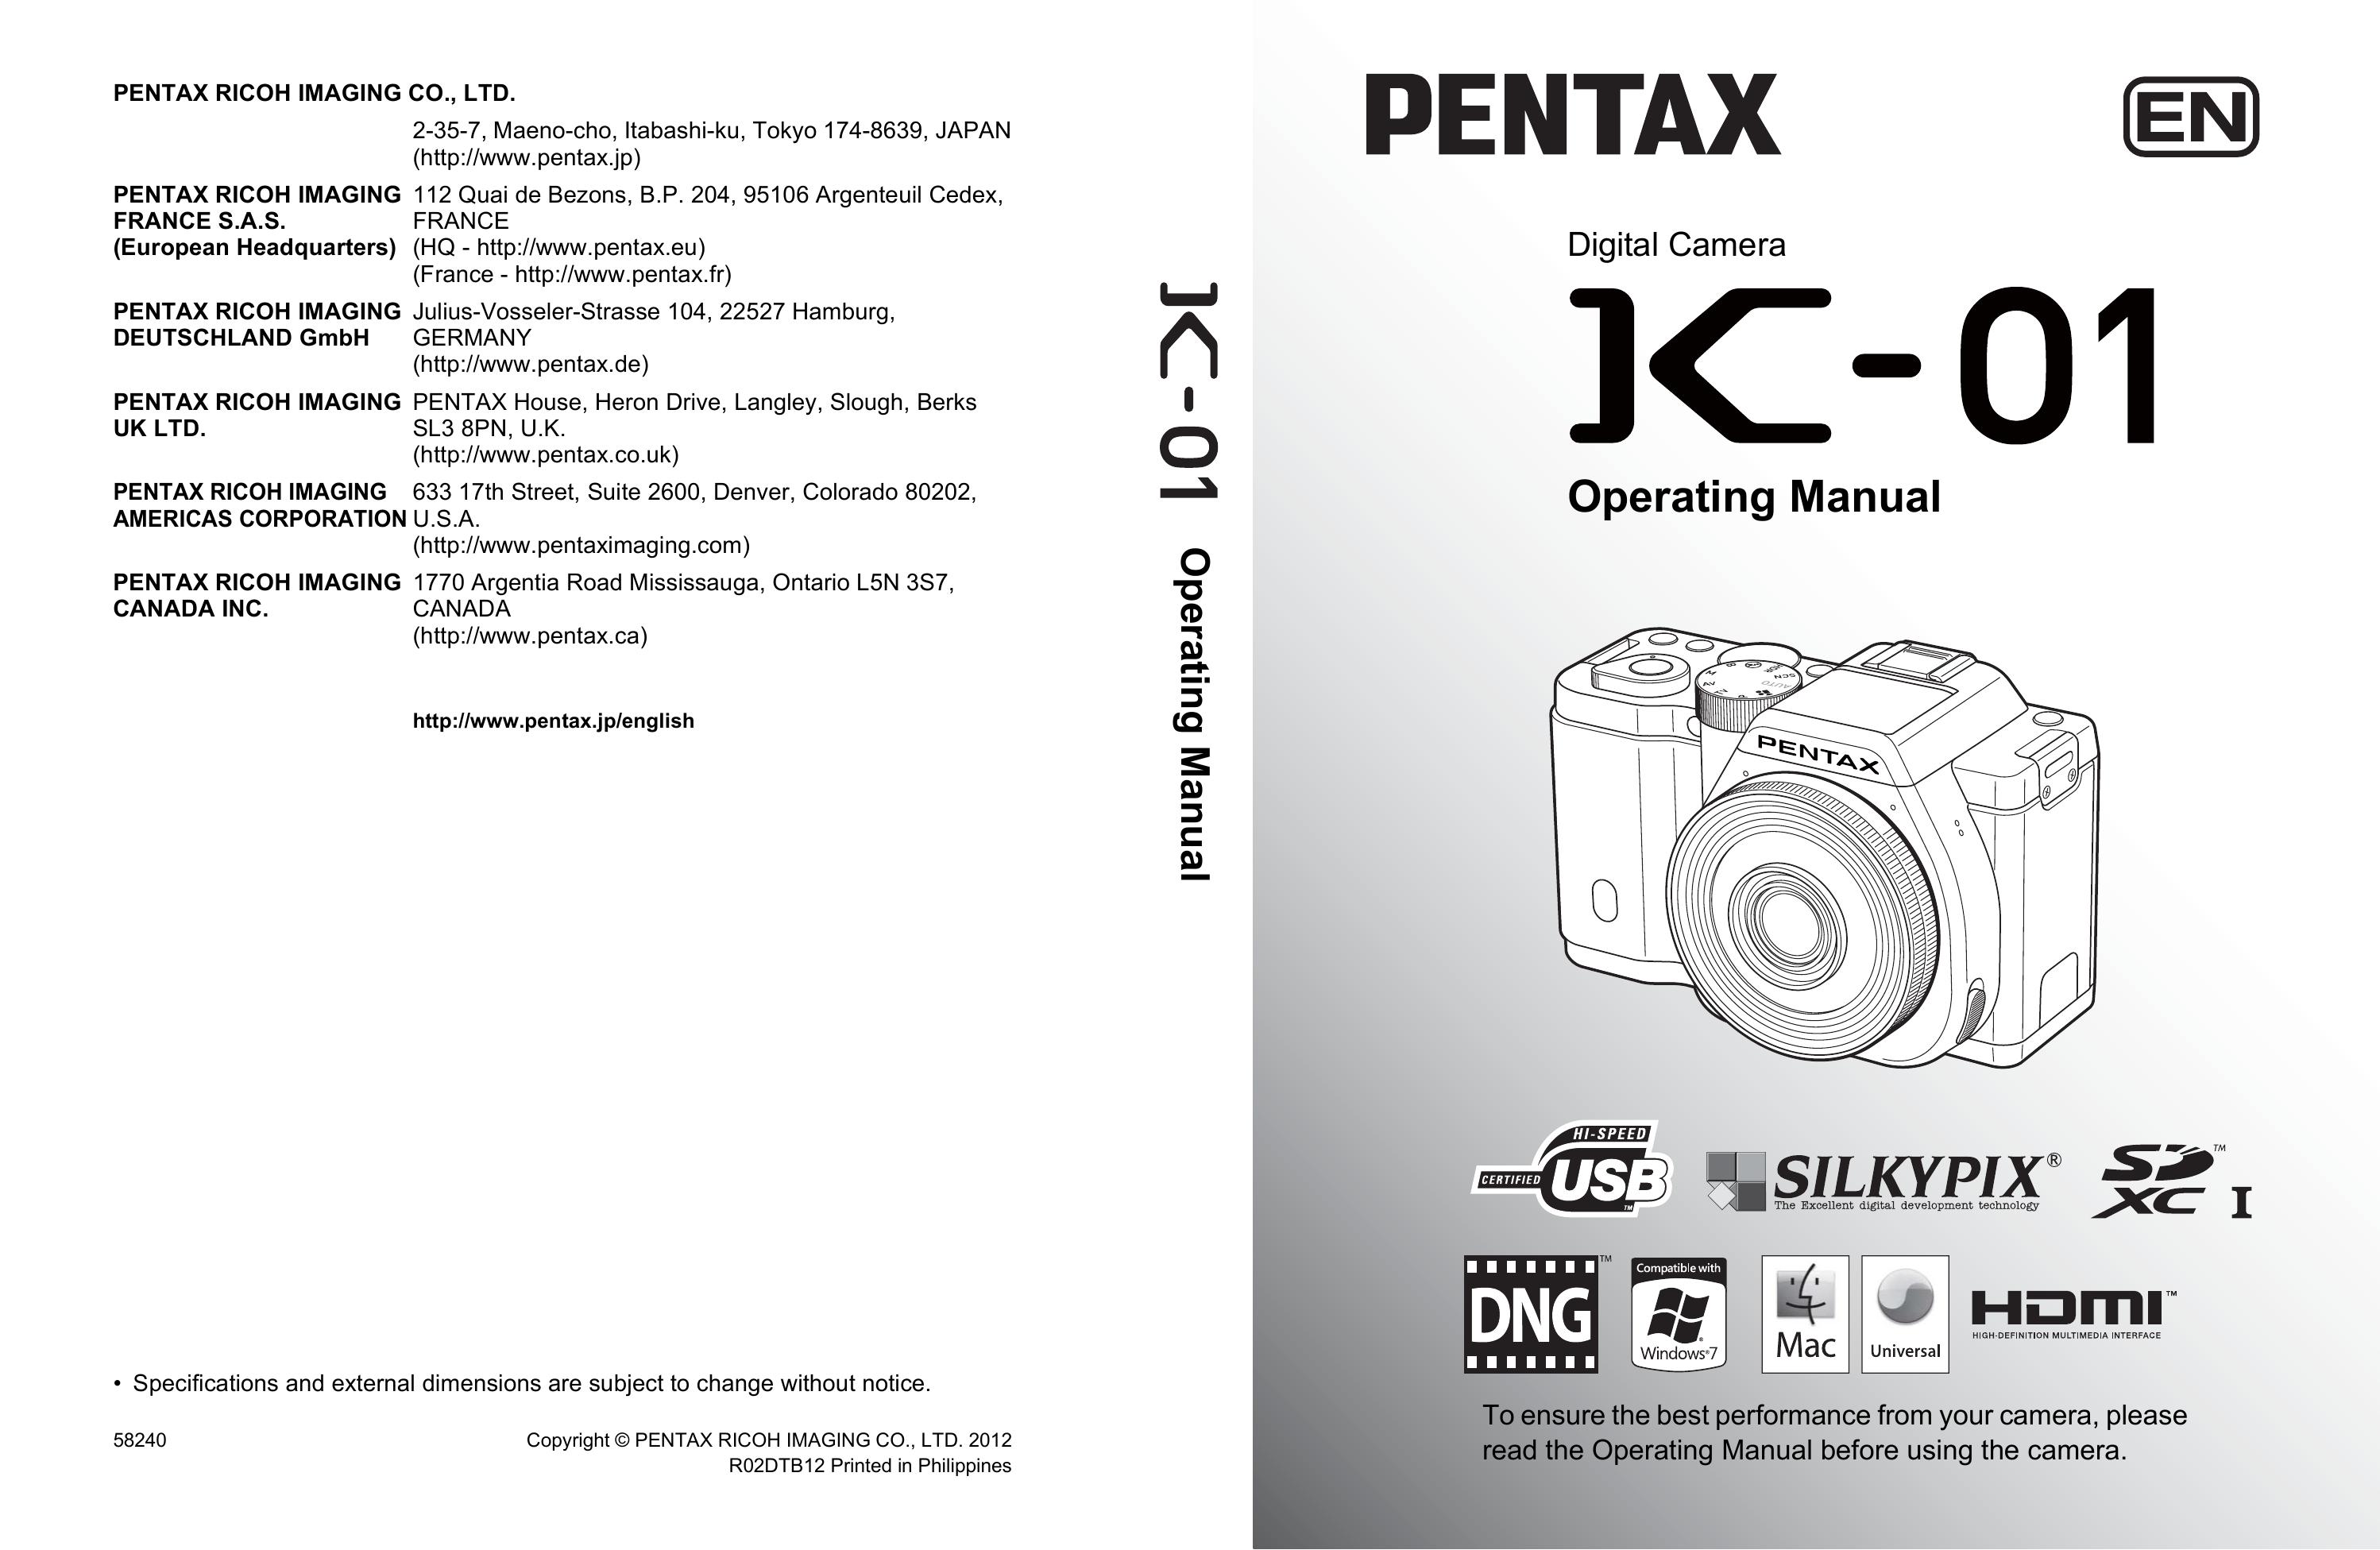 Pentax 15342 Digital Camera User Manual